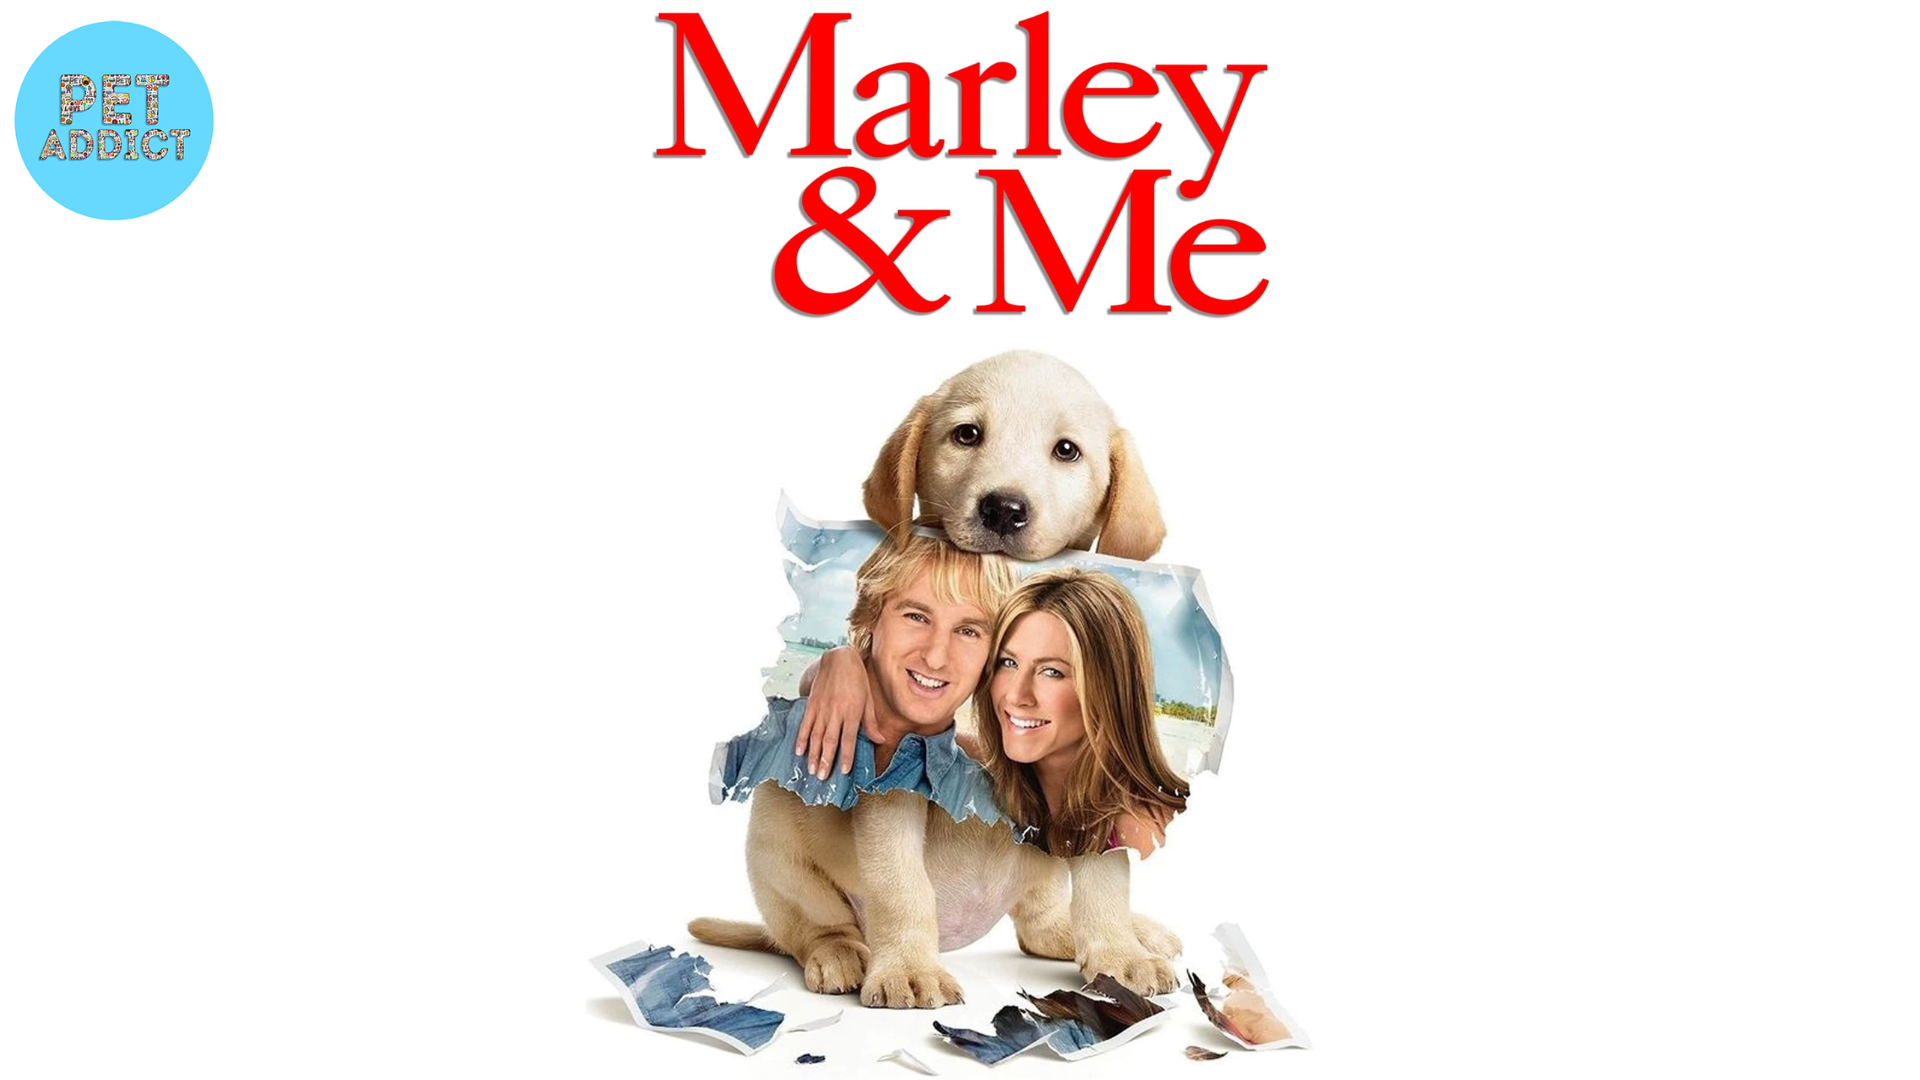 Marley & Me dog movies (2008)